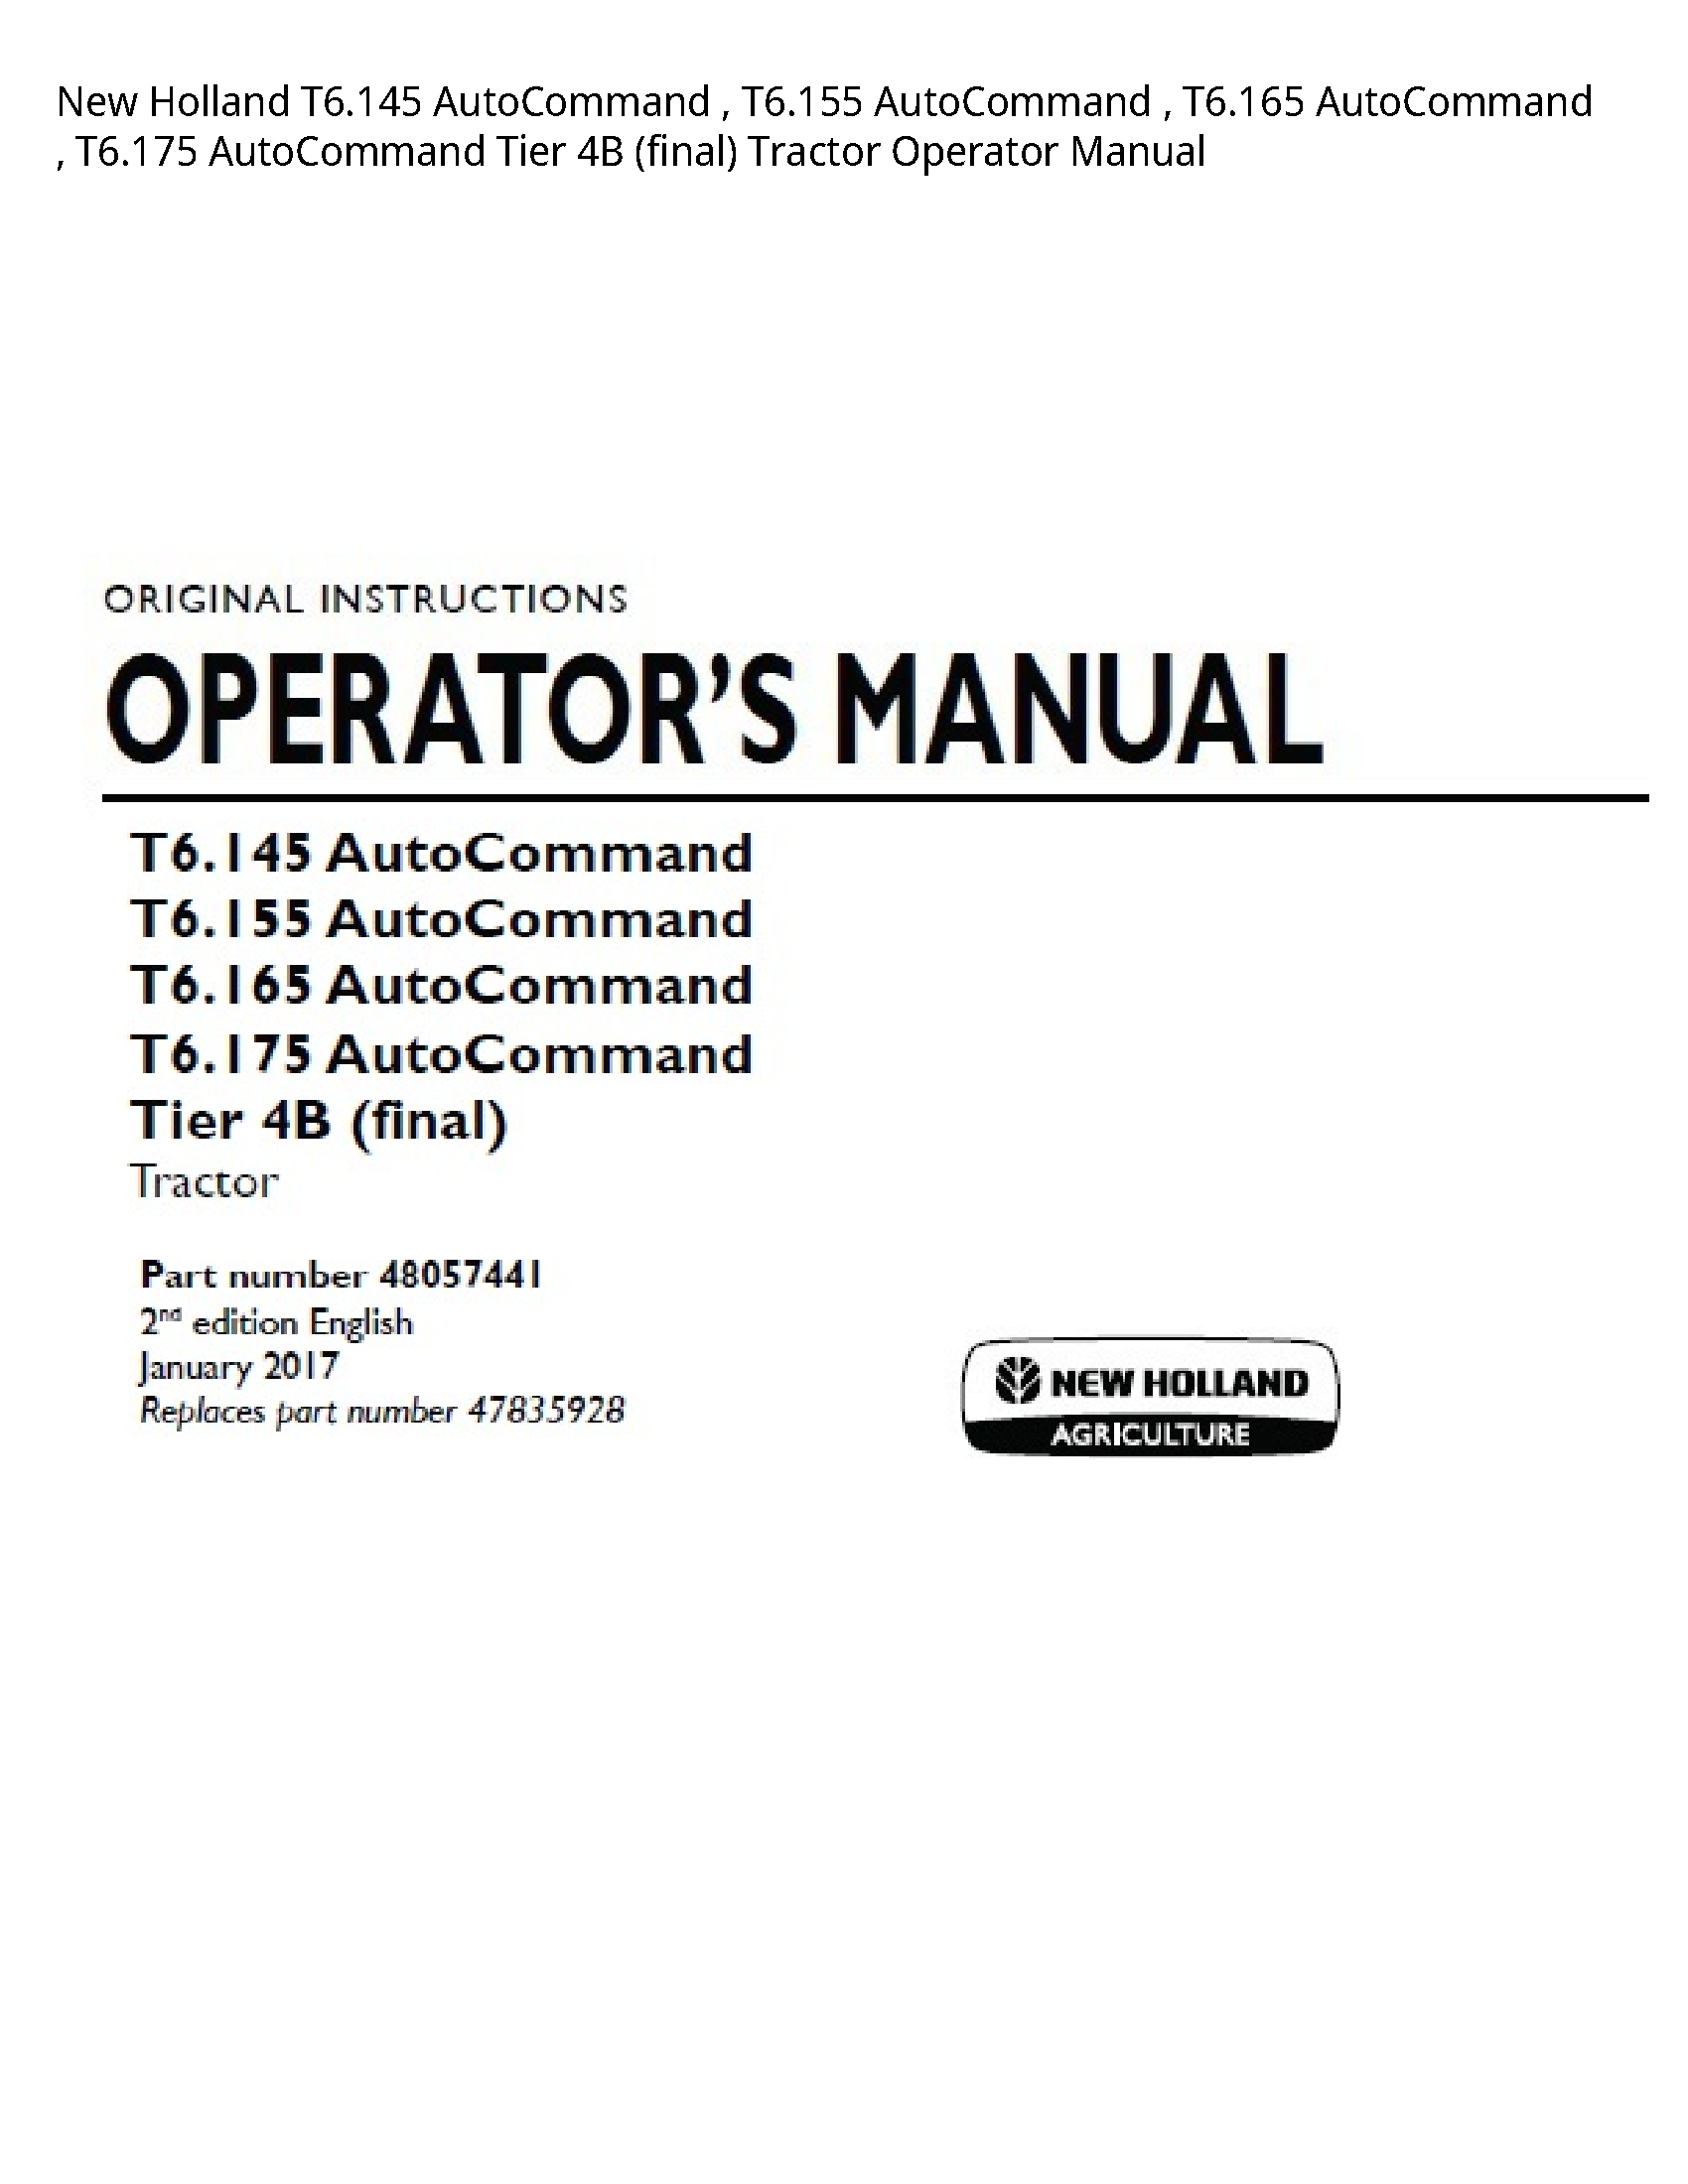 New Holland T6.145 AutoCommand AutoCommand AutoCommand AutoCommand Tier (final) Tractor Operator manual